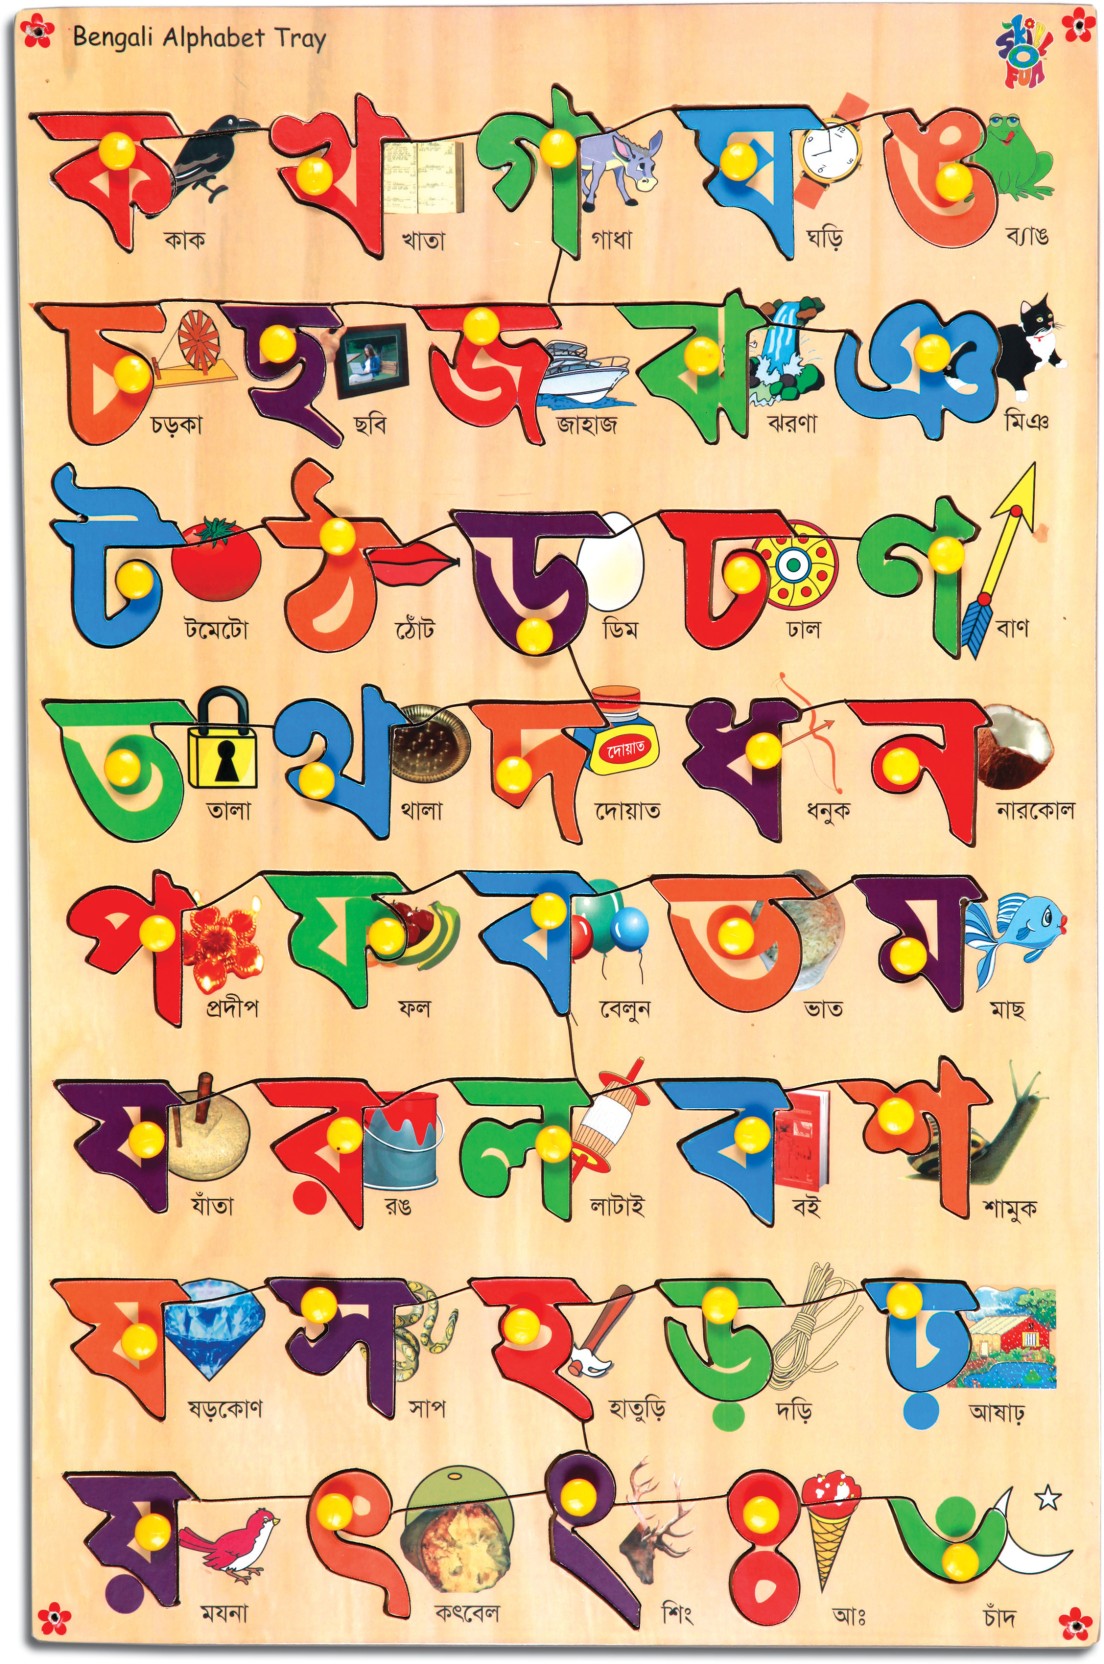 bengali alphabet in english